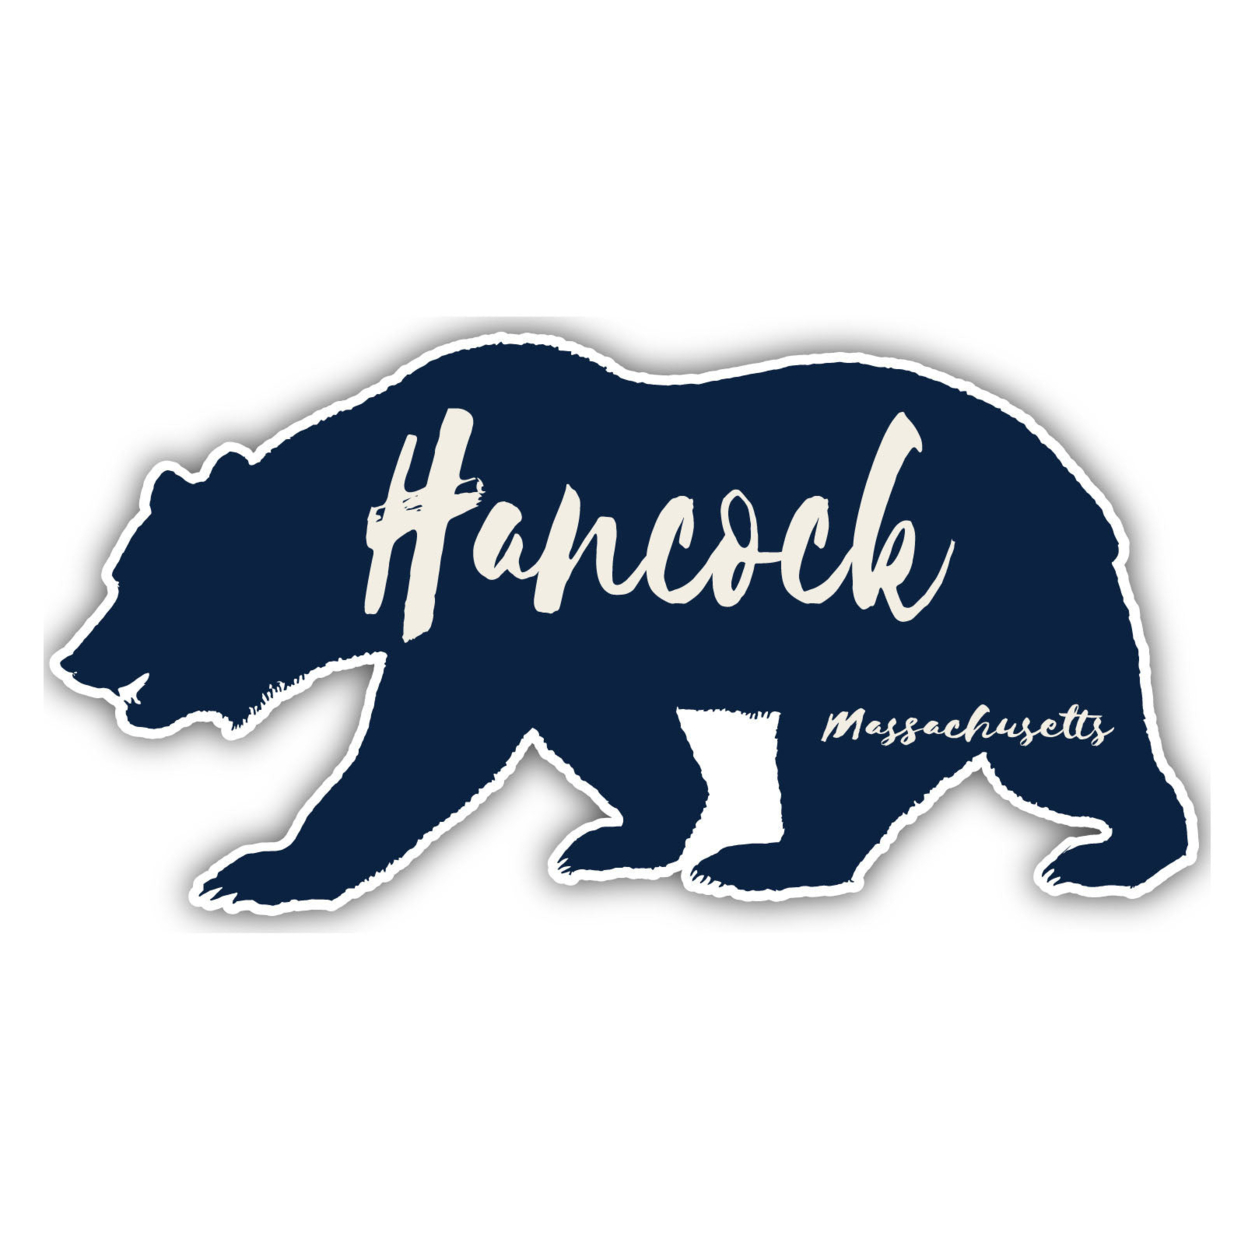 Hancock Massachusetts Souvenir Decorative Stickers (Choose Theme And Size) - 4-Pack, 6-Inch, Adventures Awaits